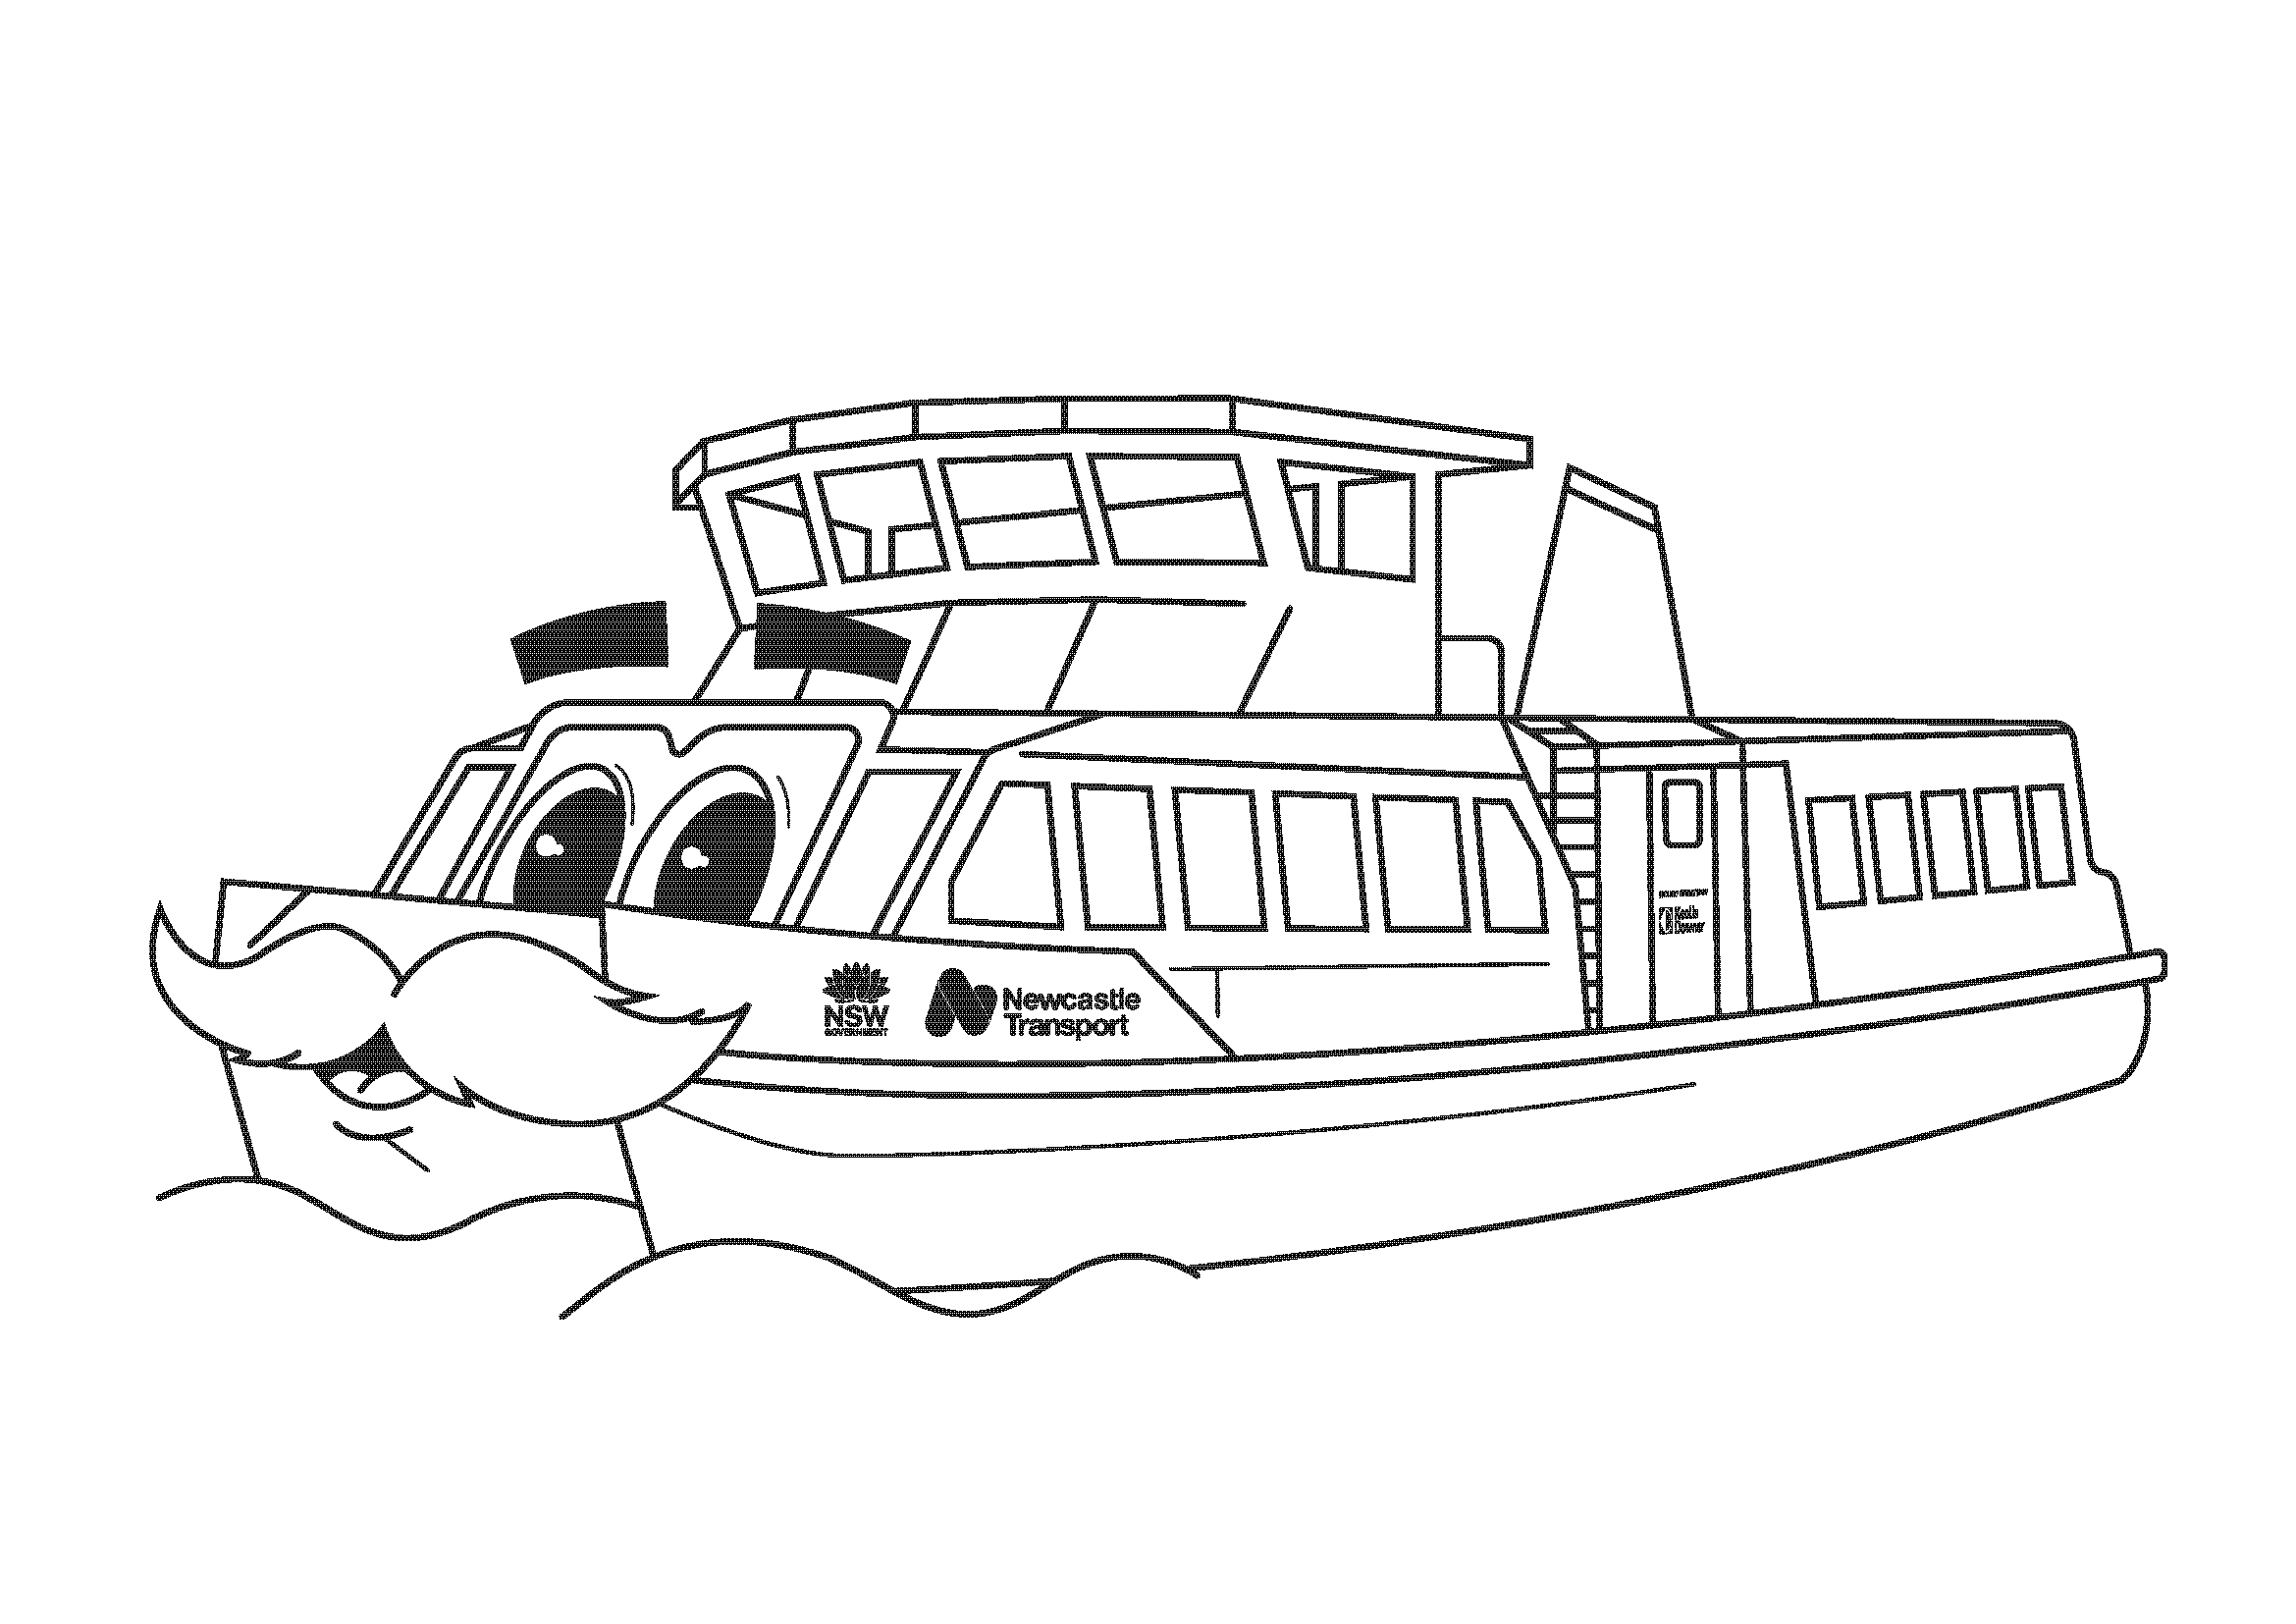 Frank the ferry illustration